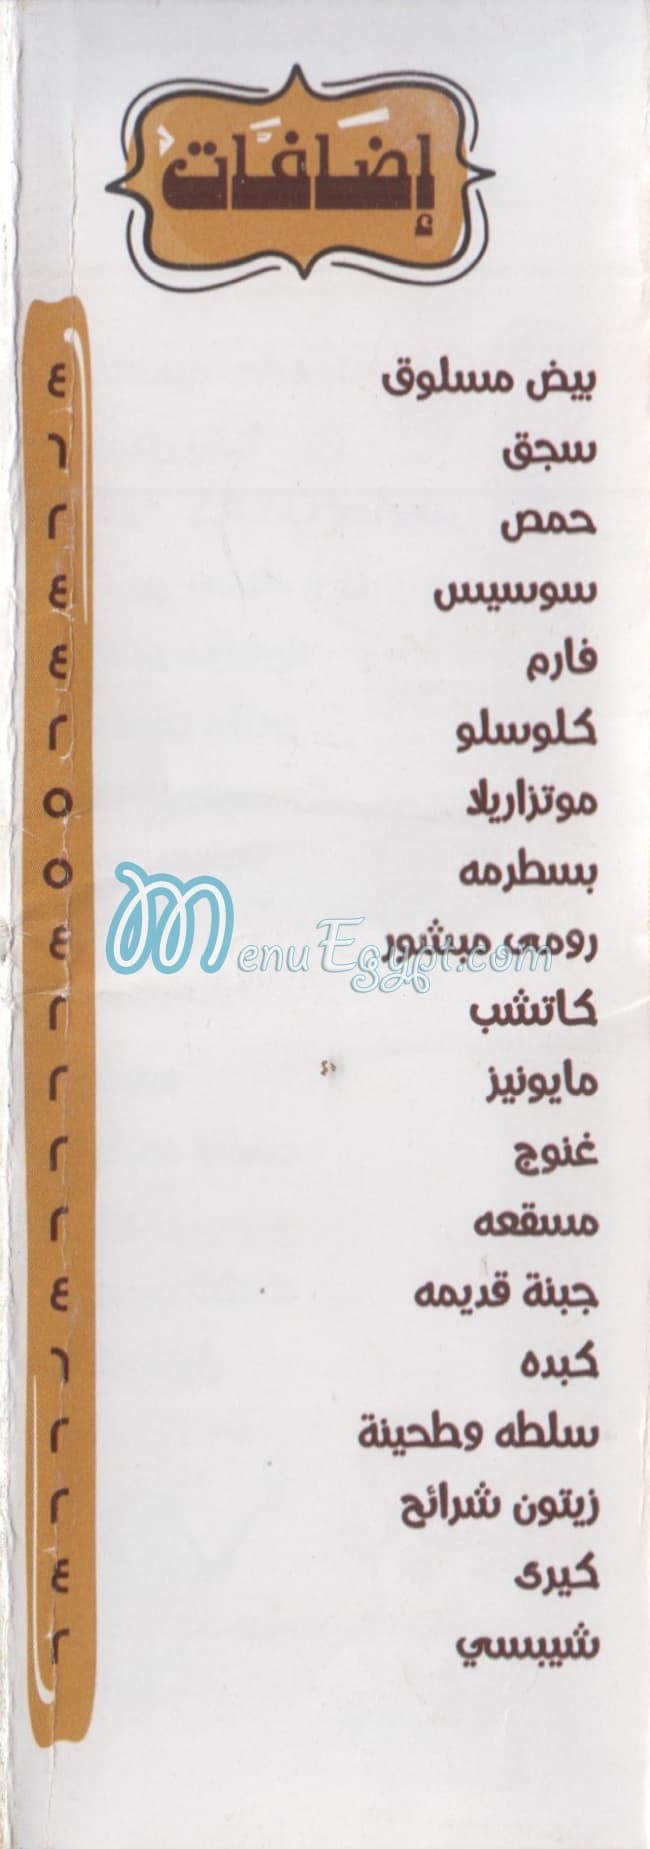 El Shekh Gamal menu Egypt 1